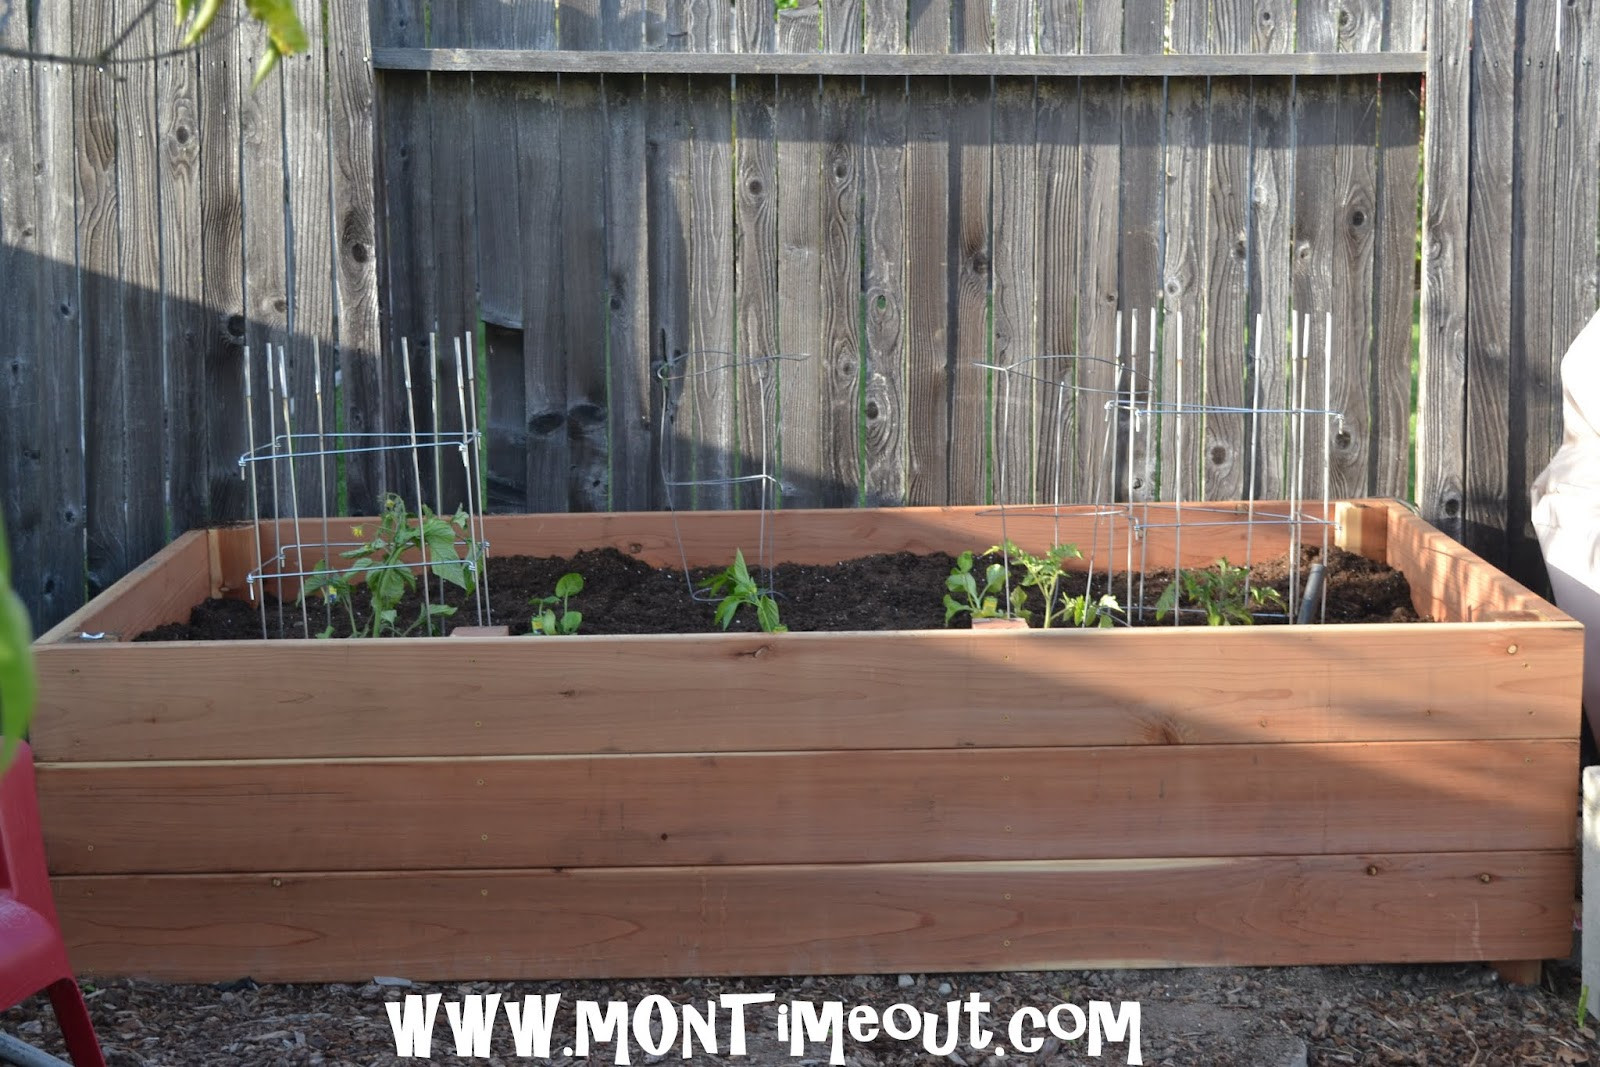 Best ideas about DIY Planter Boxes
. Save or Pin DIY Garden Planter Box Tutorial Now.